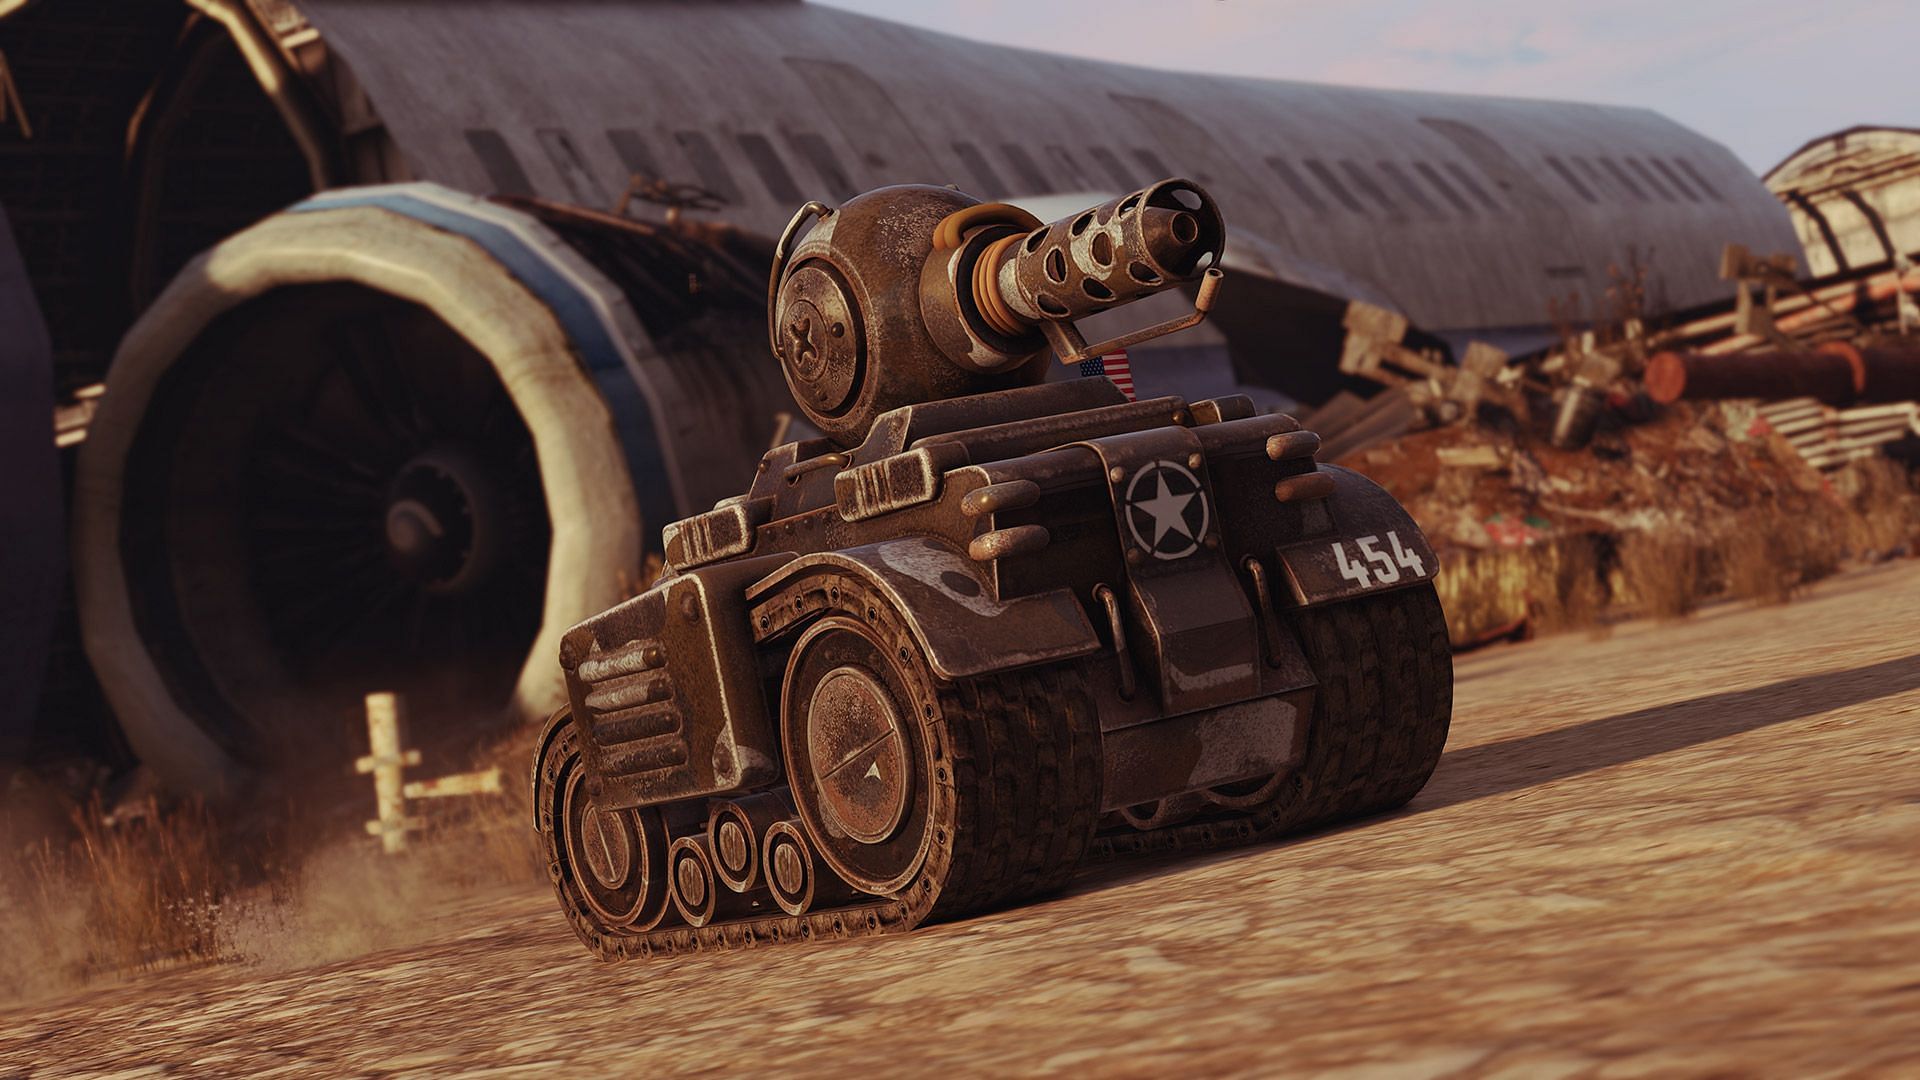 The Invade and Persuade Tank (Image via Rockstar Games)